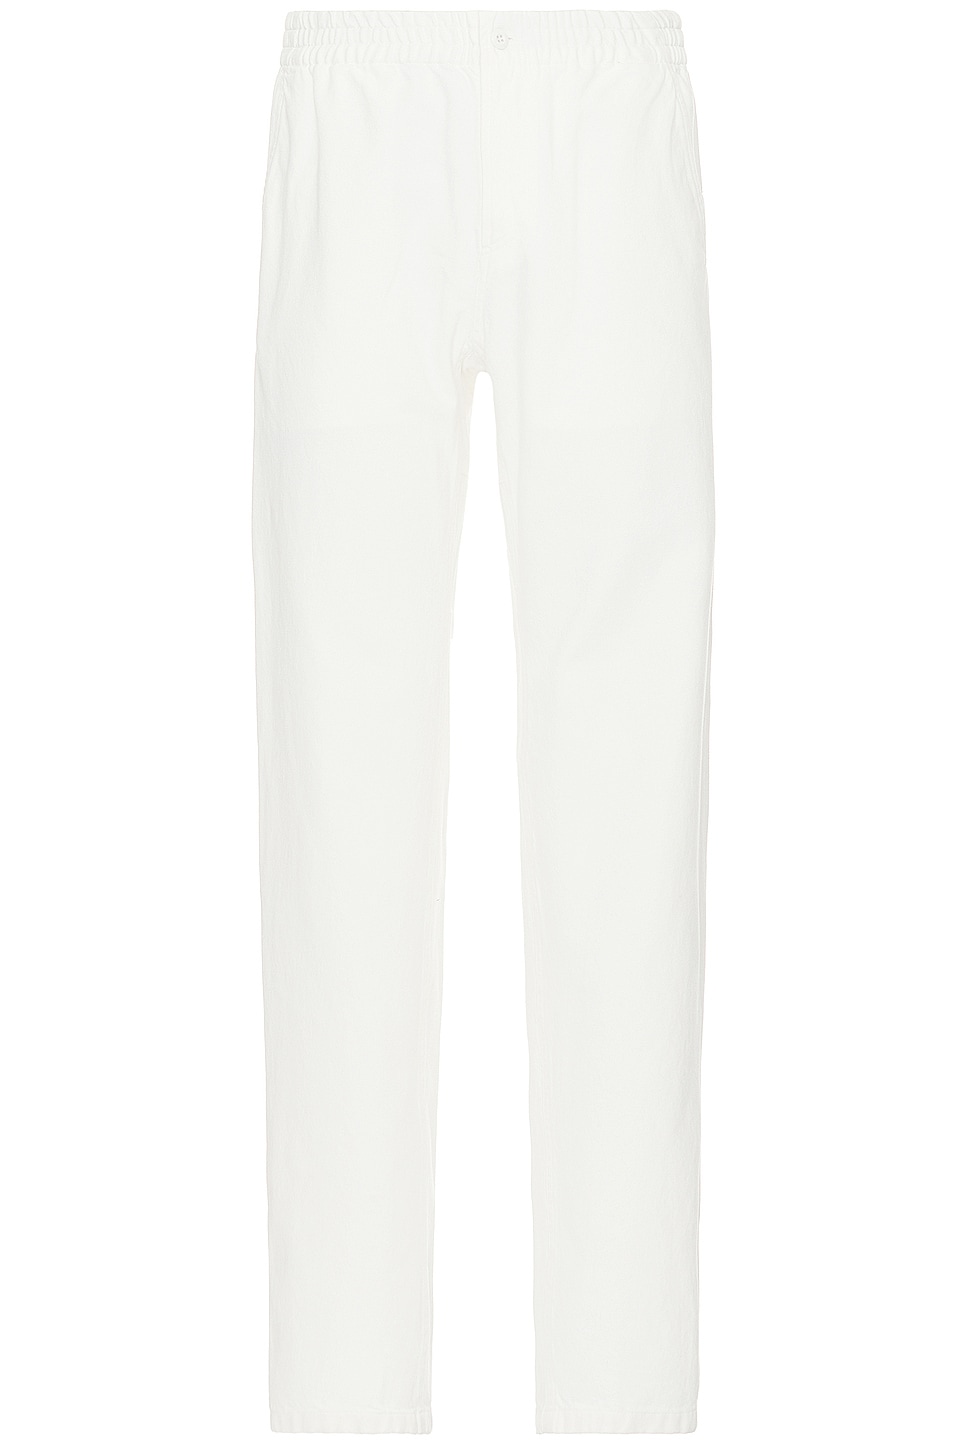 Image 1 of A.P.C. Pantalon Chuck in Off White